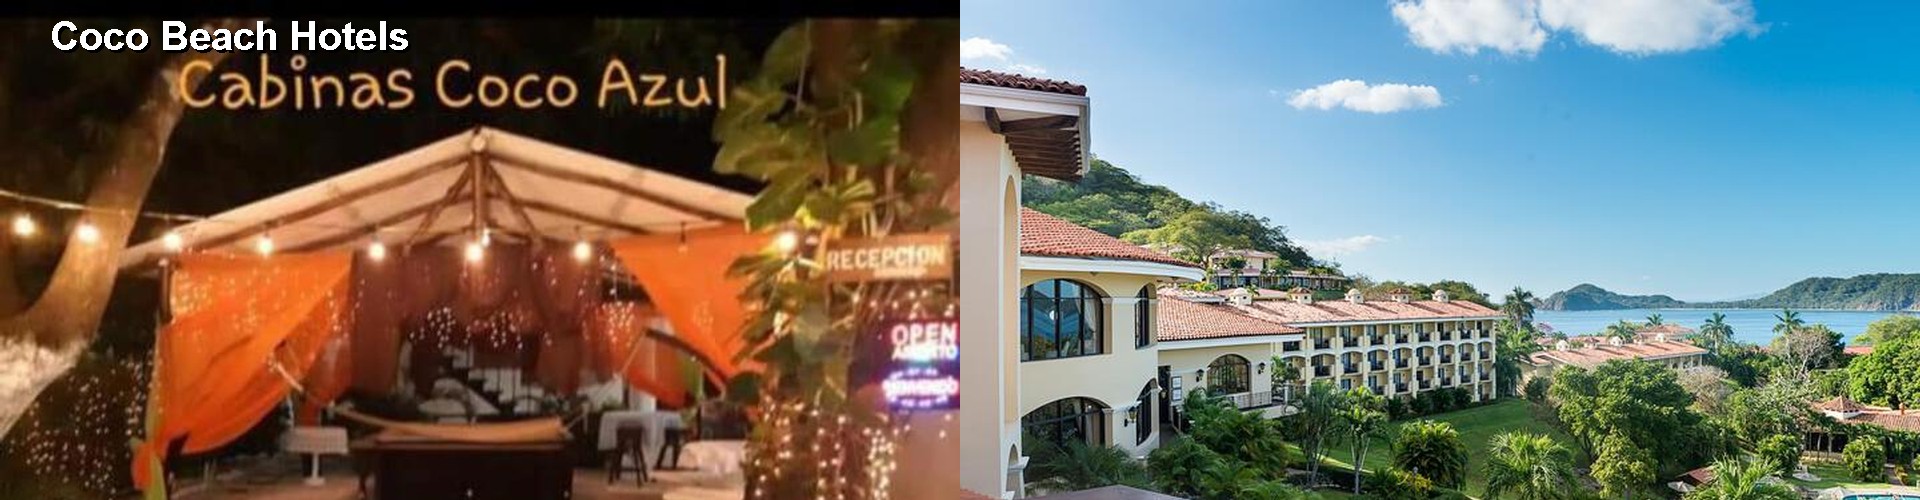 5 Best Hotels near Coco Beach